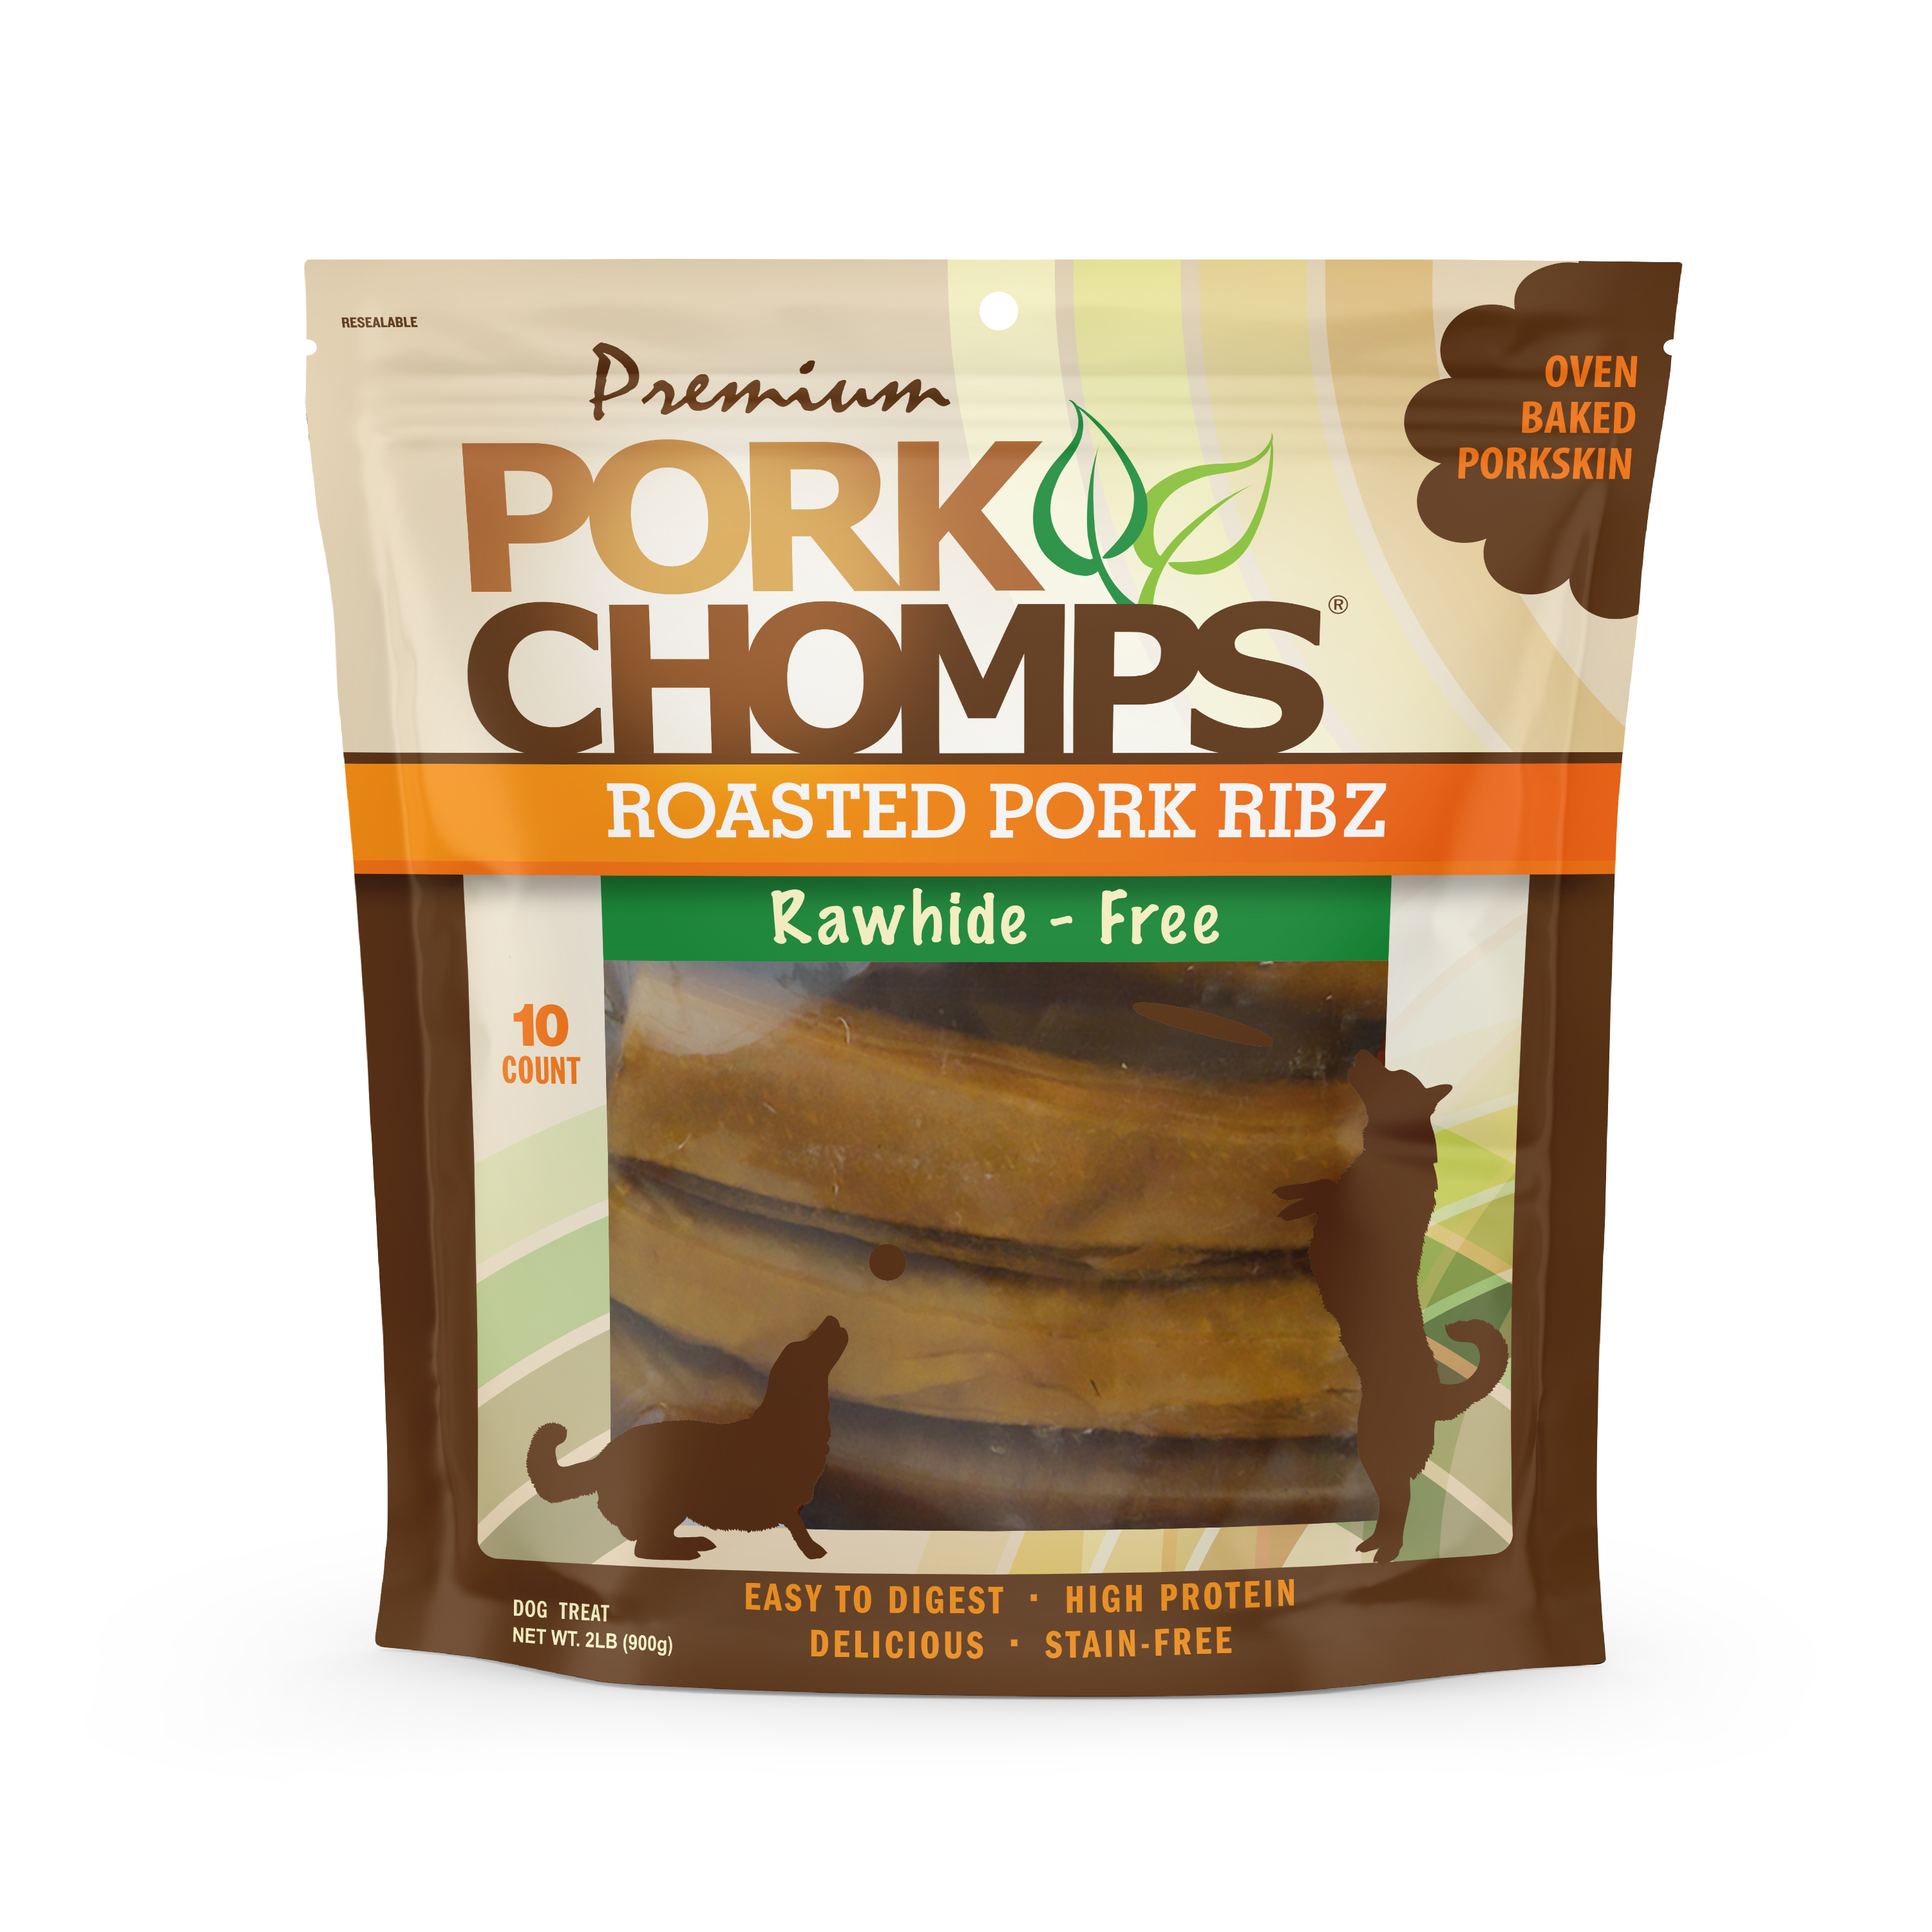 Premium Pork Chomps Roasted Pork Ribs, Rawhide-Free, 10 Count - Walmart.com